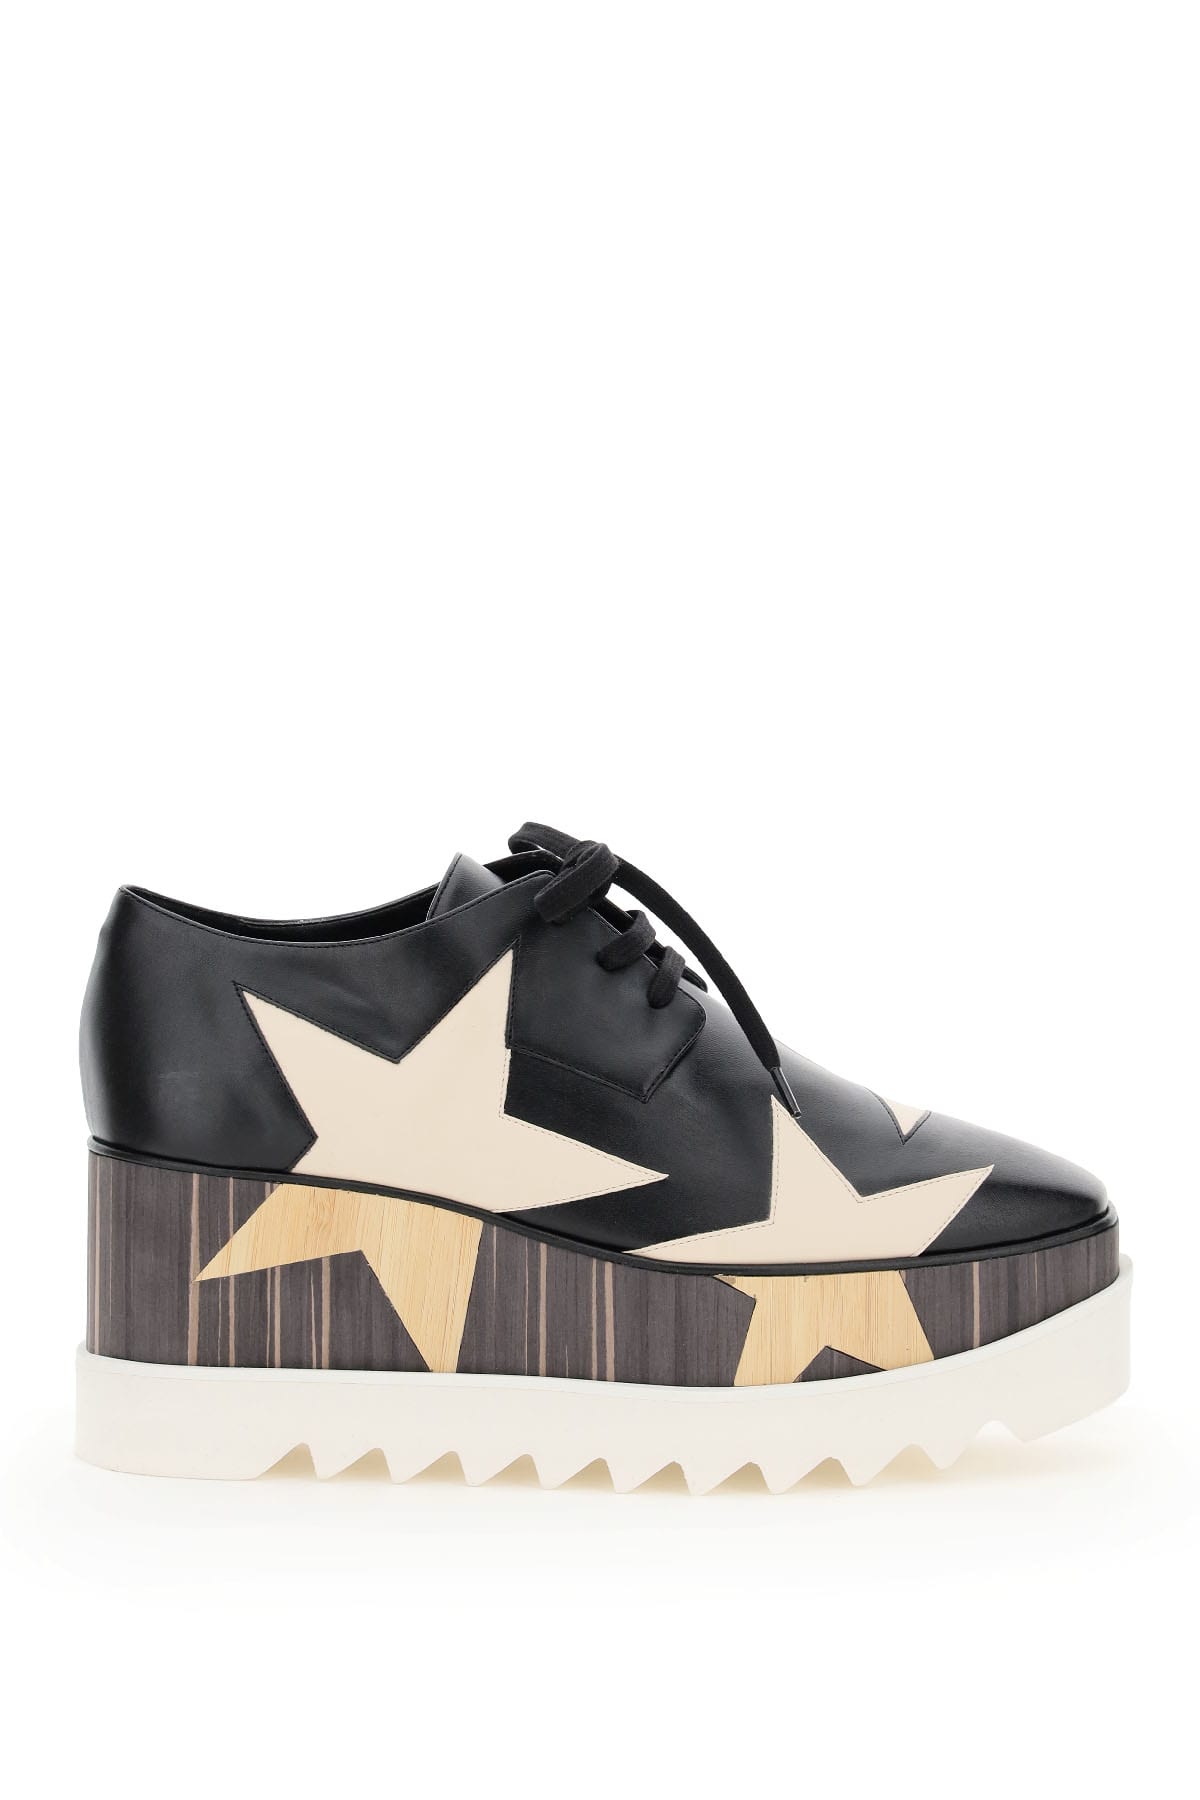 Stella McCartney Elyse Lace-up Shoes Star